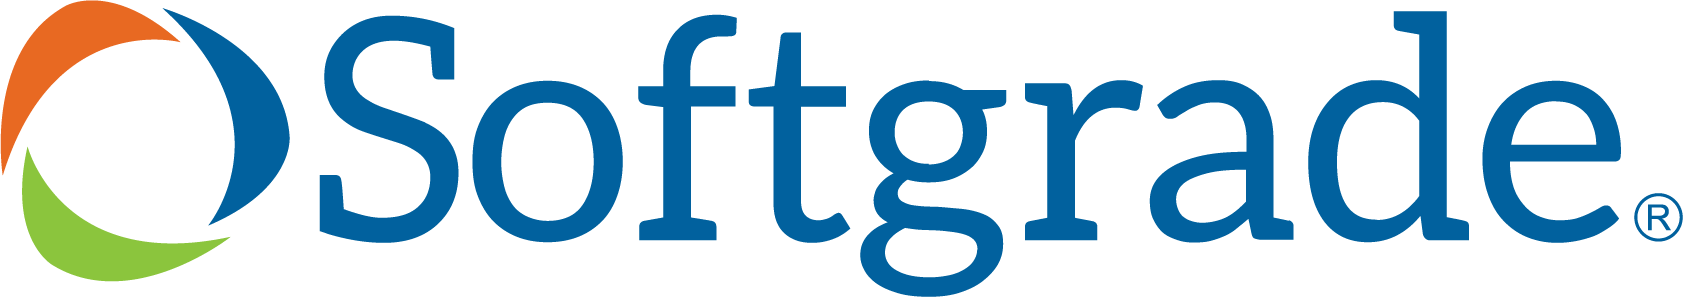 Softgrade Logo